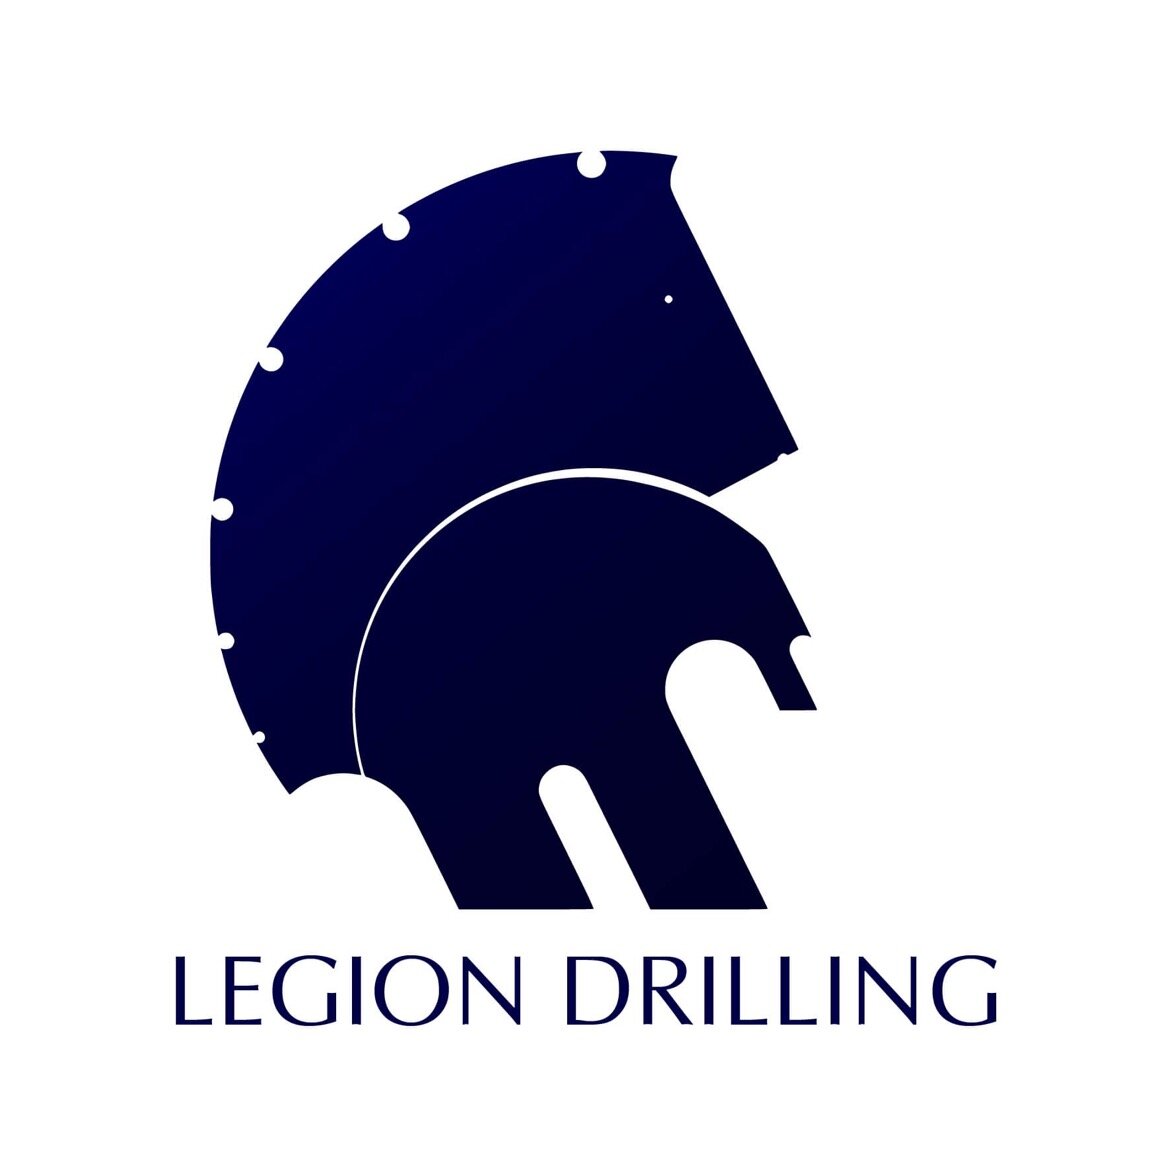 Drilling Companies Brisbane | Best Drilling Contractor in Brisbane